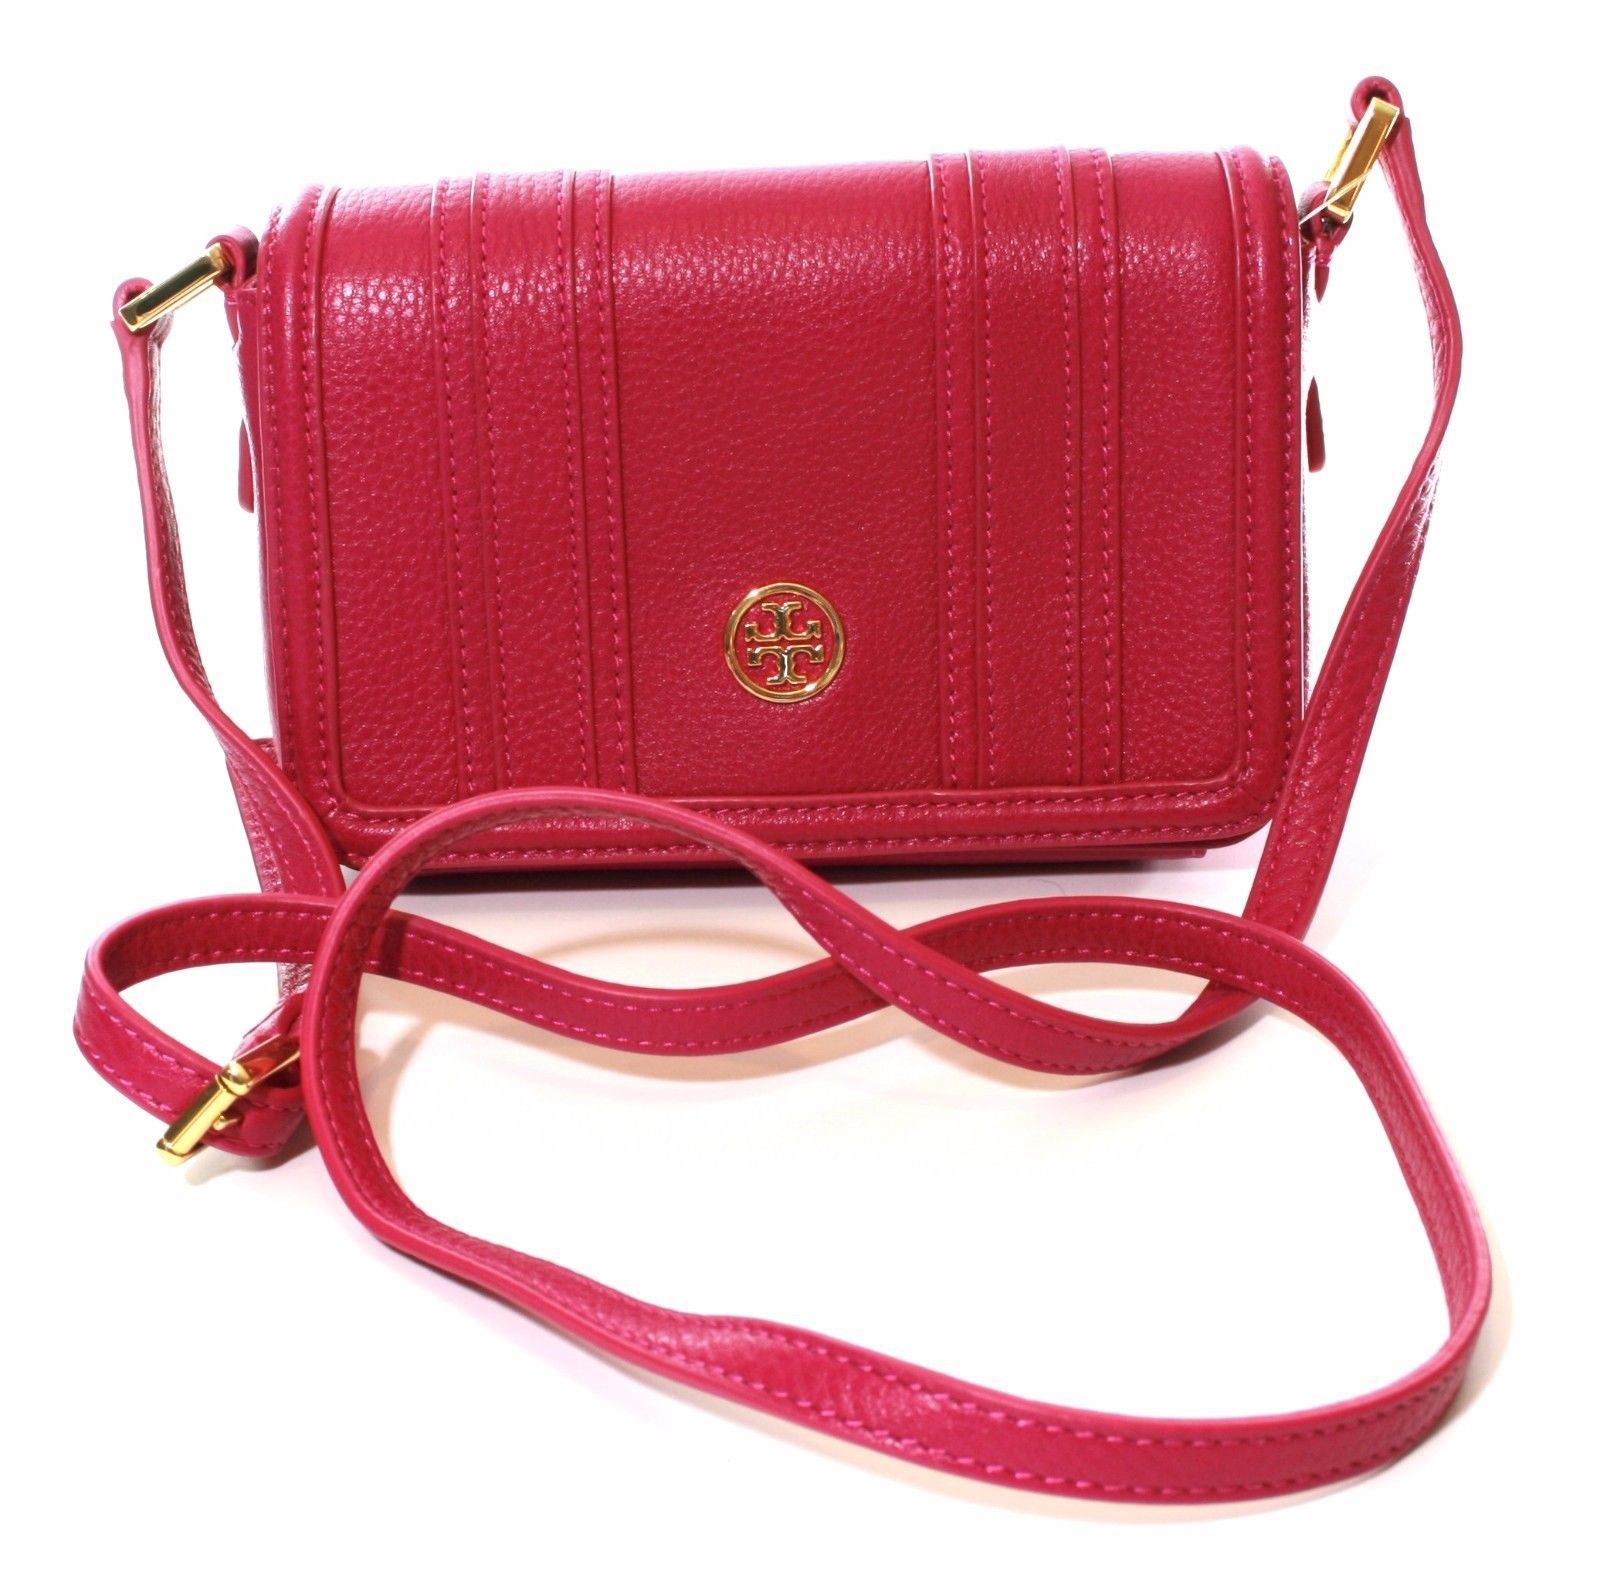 Tory Burch Landon Mini Cross Body Bag Leather Wildflower Pink Handbag - $243.77